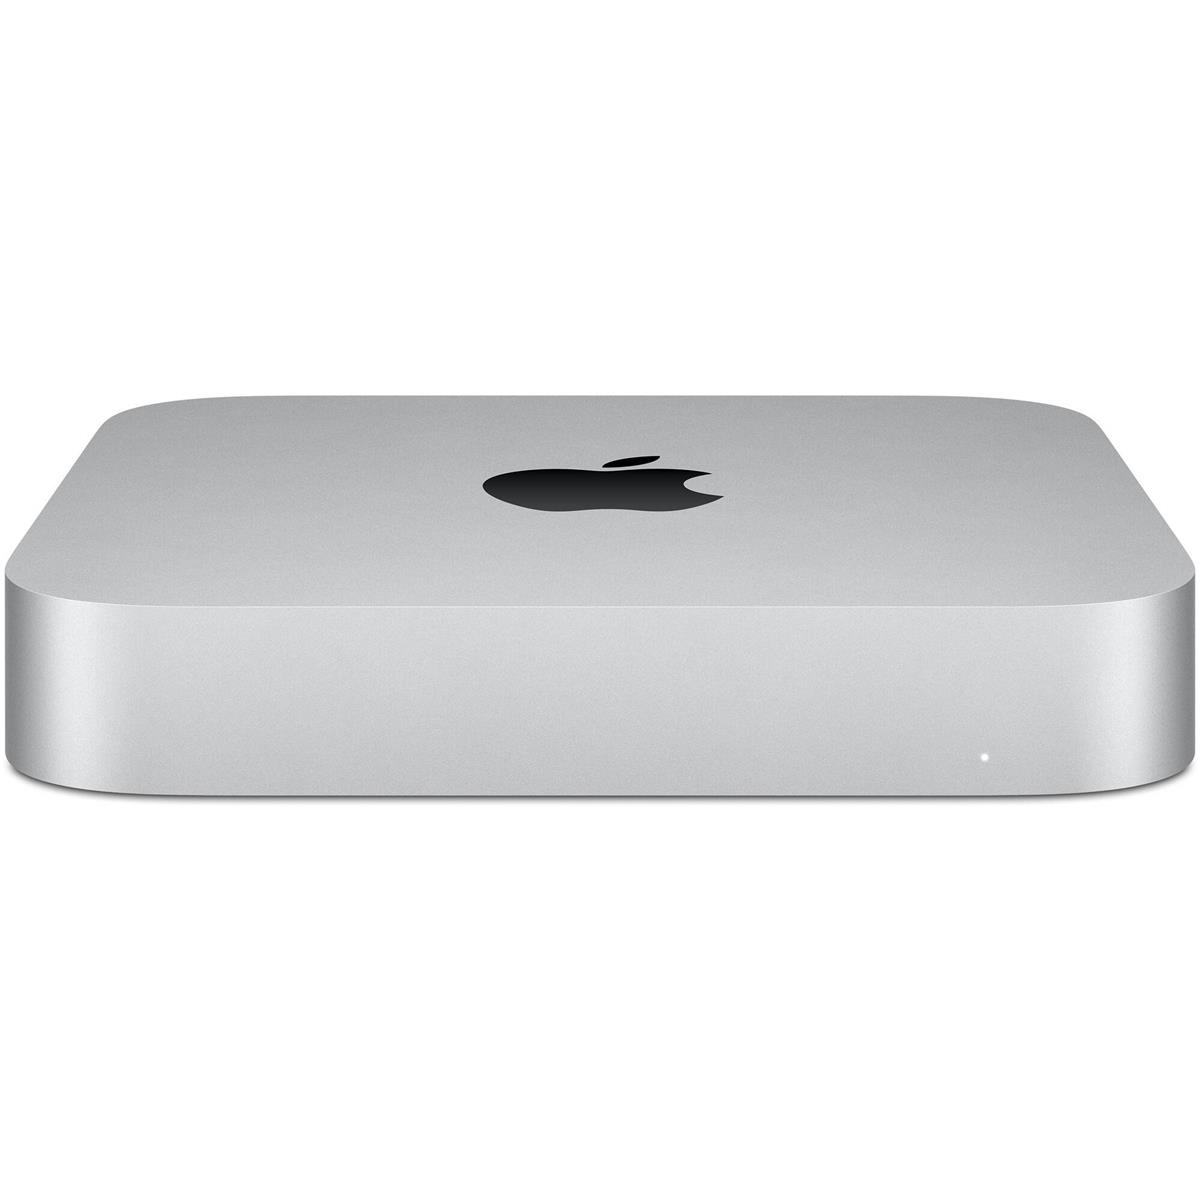 2020 Mac Mini M1 16GB + $20 off Apple Care $789 at Adorama